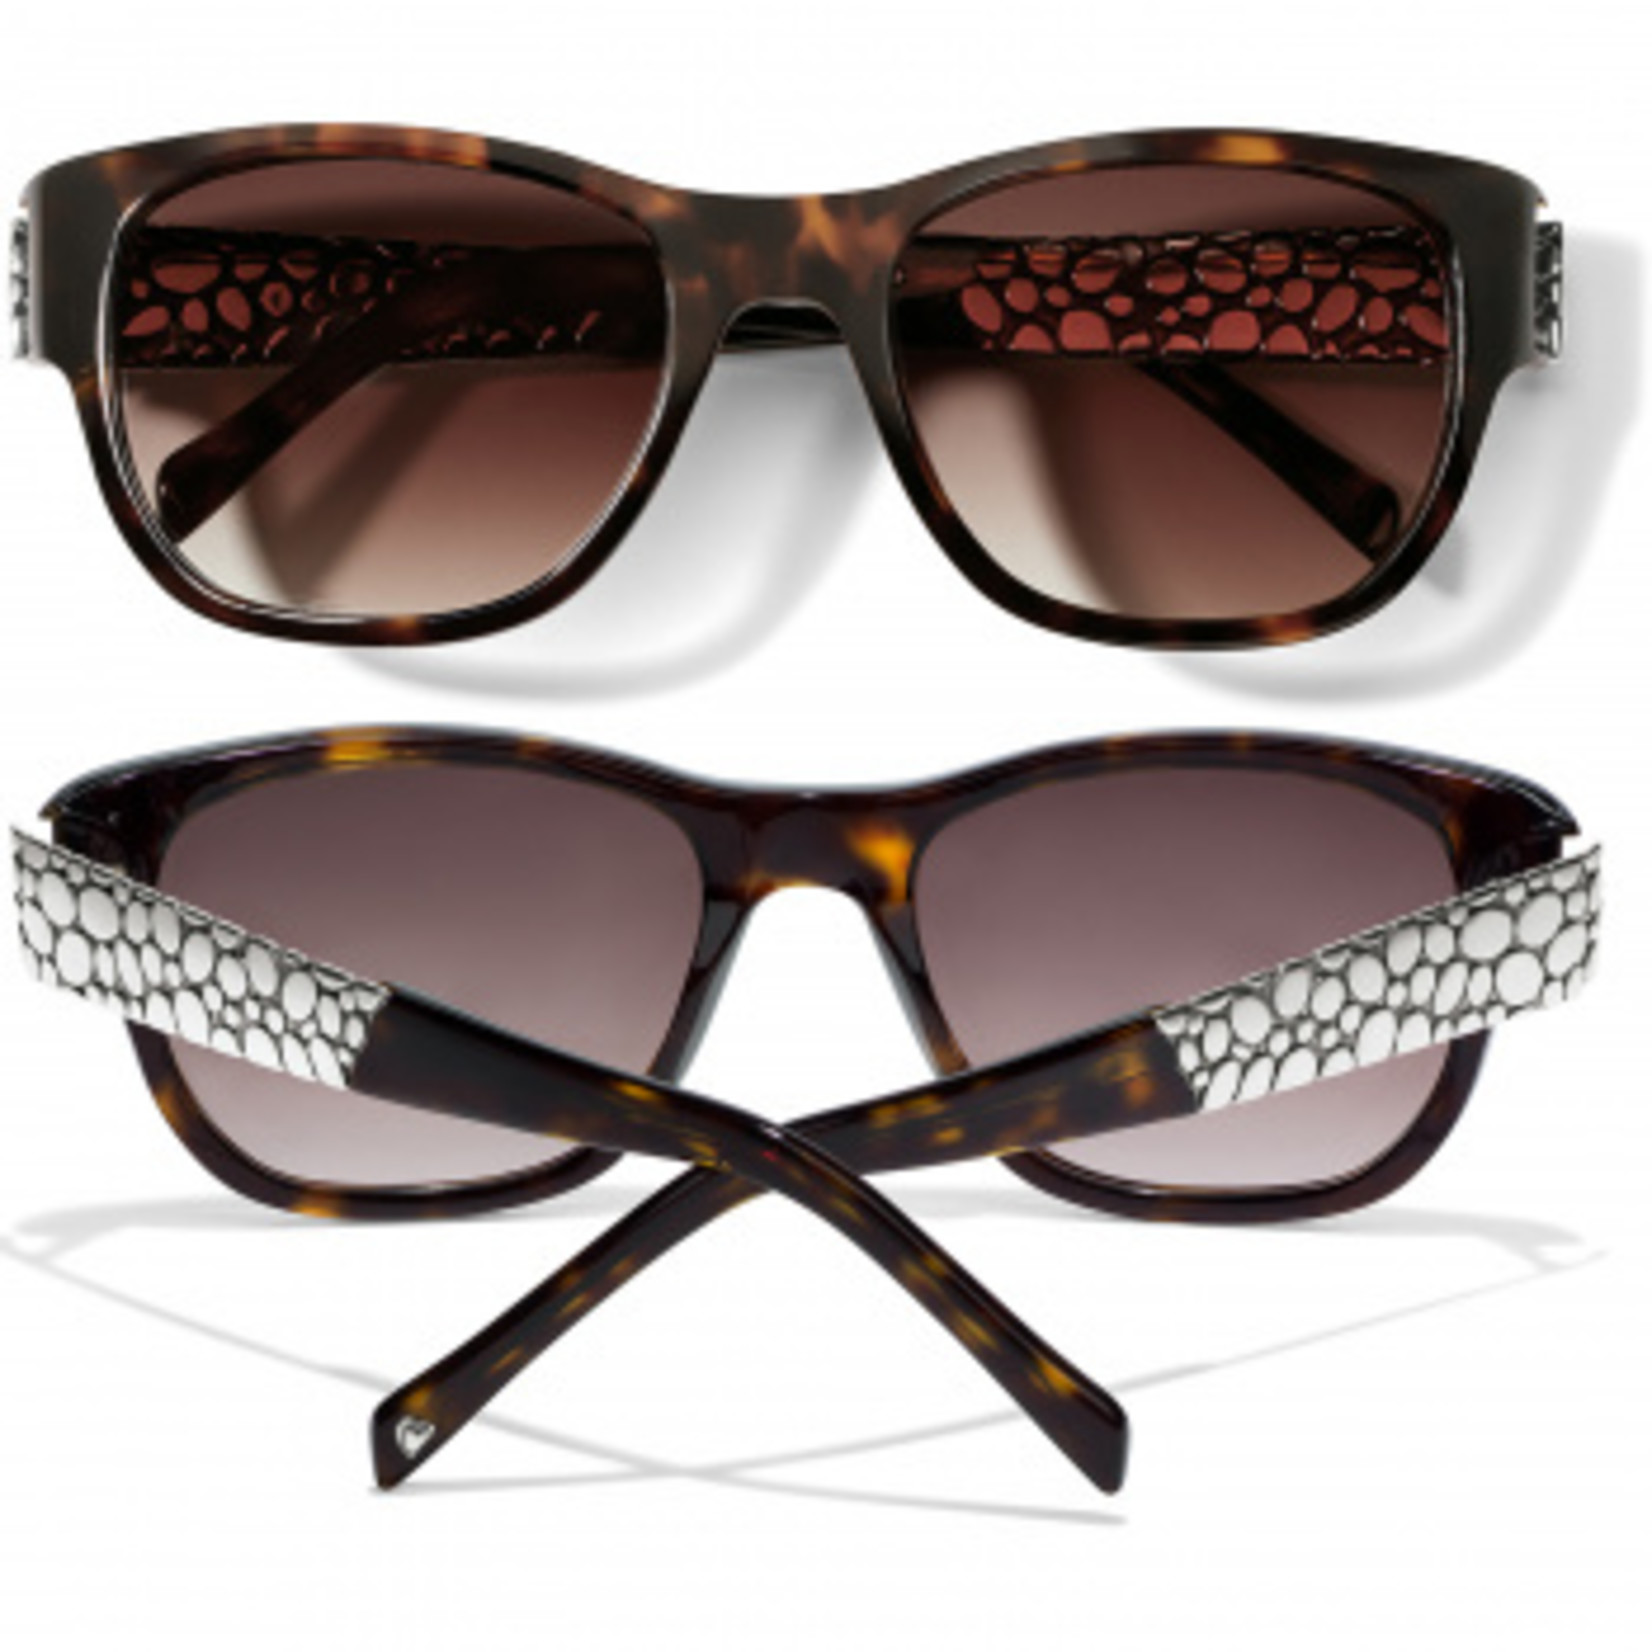 Brighton Pebble Tortoise Sunglasses